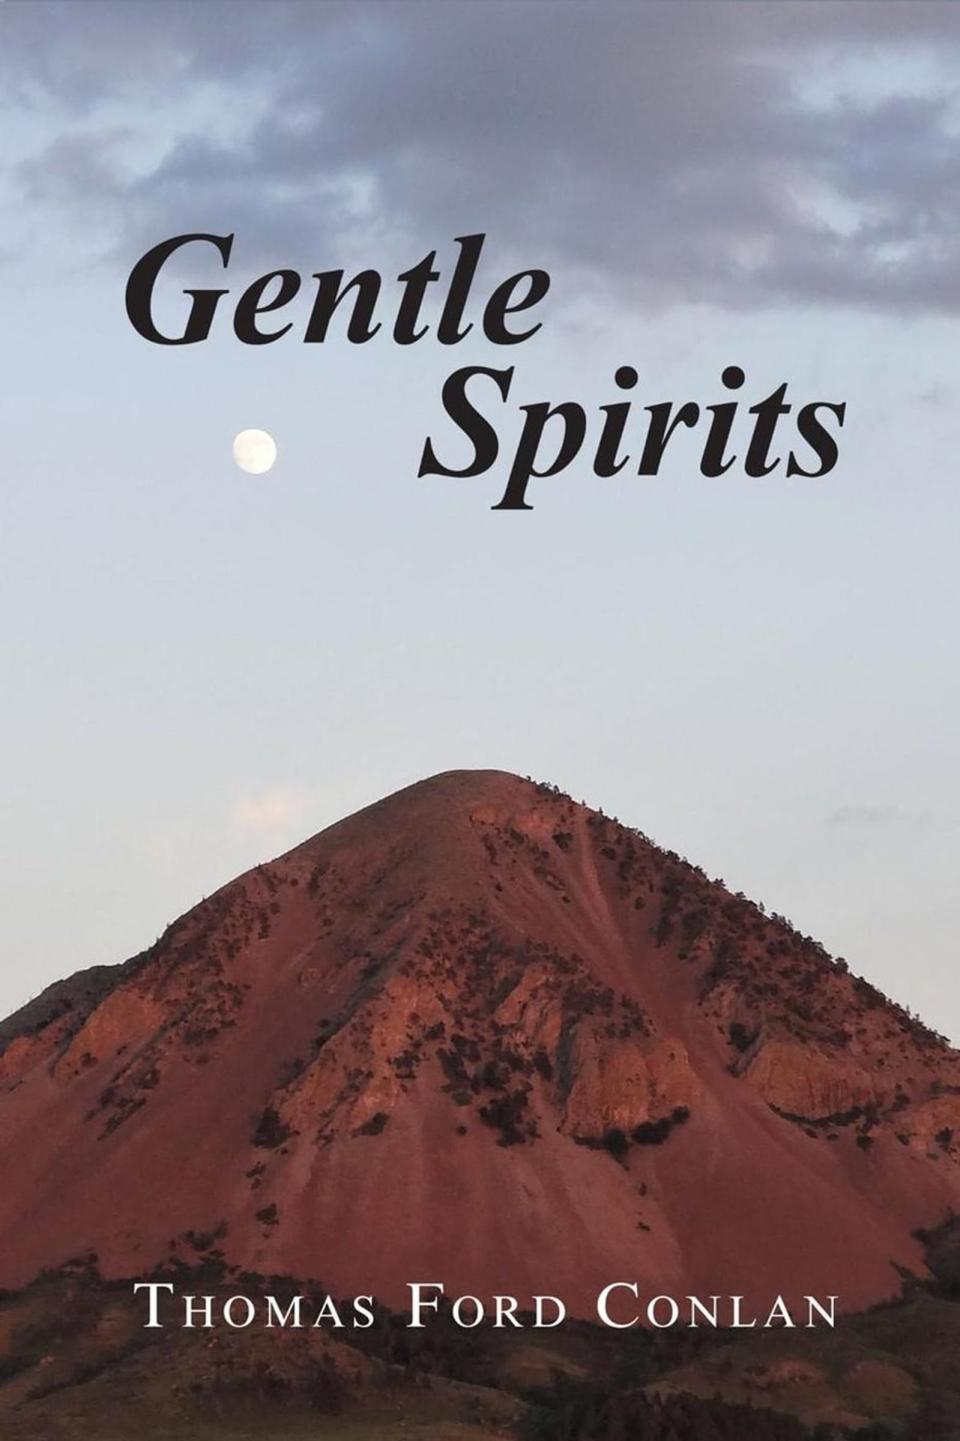 "Gentle Spirits" by Thomas Ford Conlan